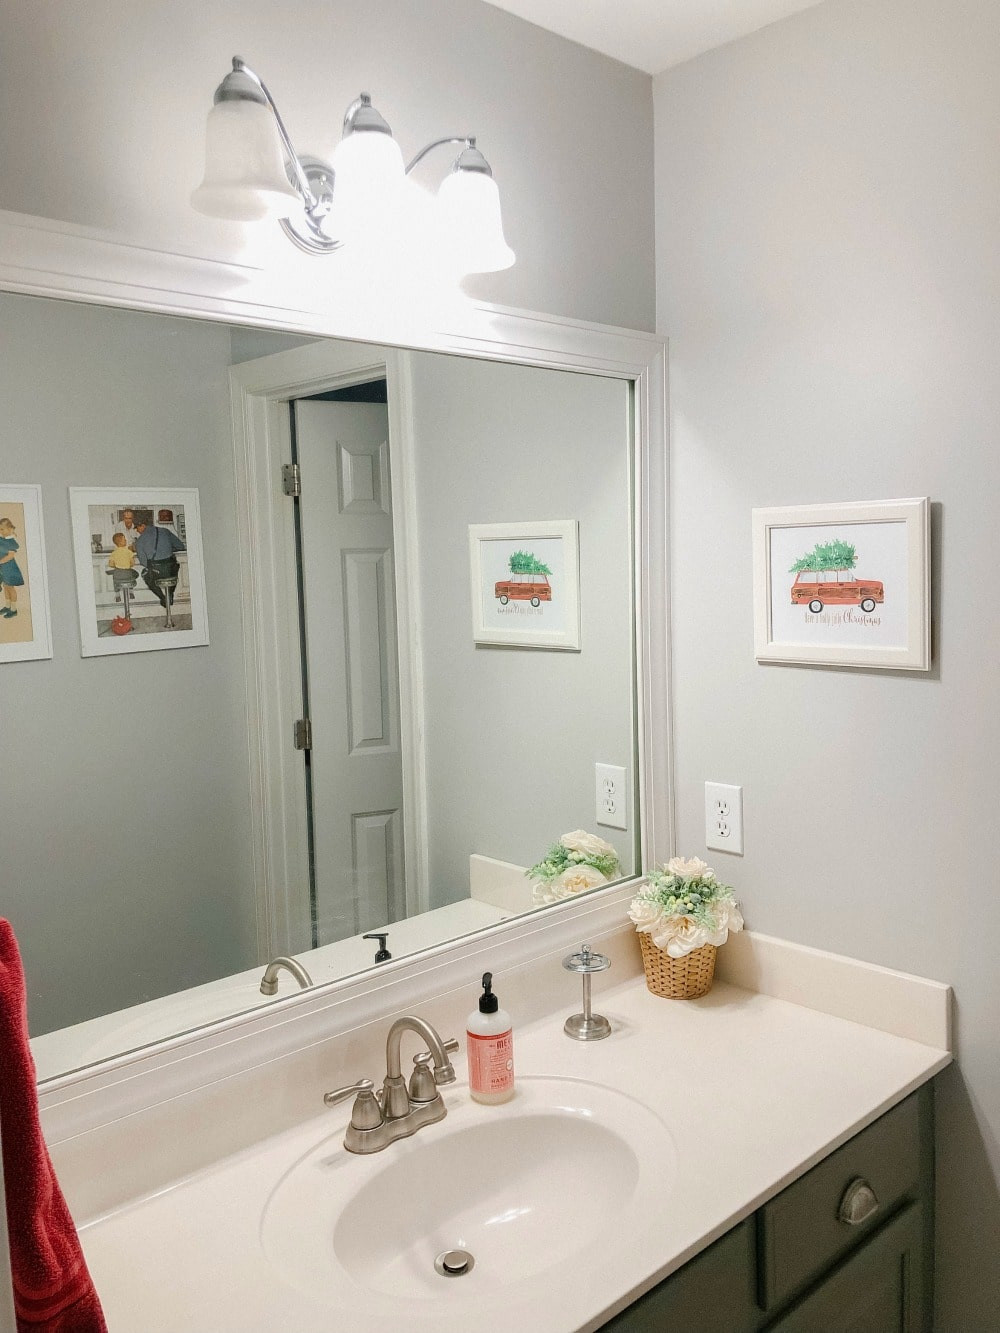 Light Fixture Bathroom
 Affordable & Pretty Bathroom Light Fixtures